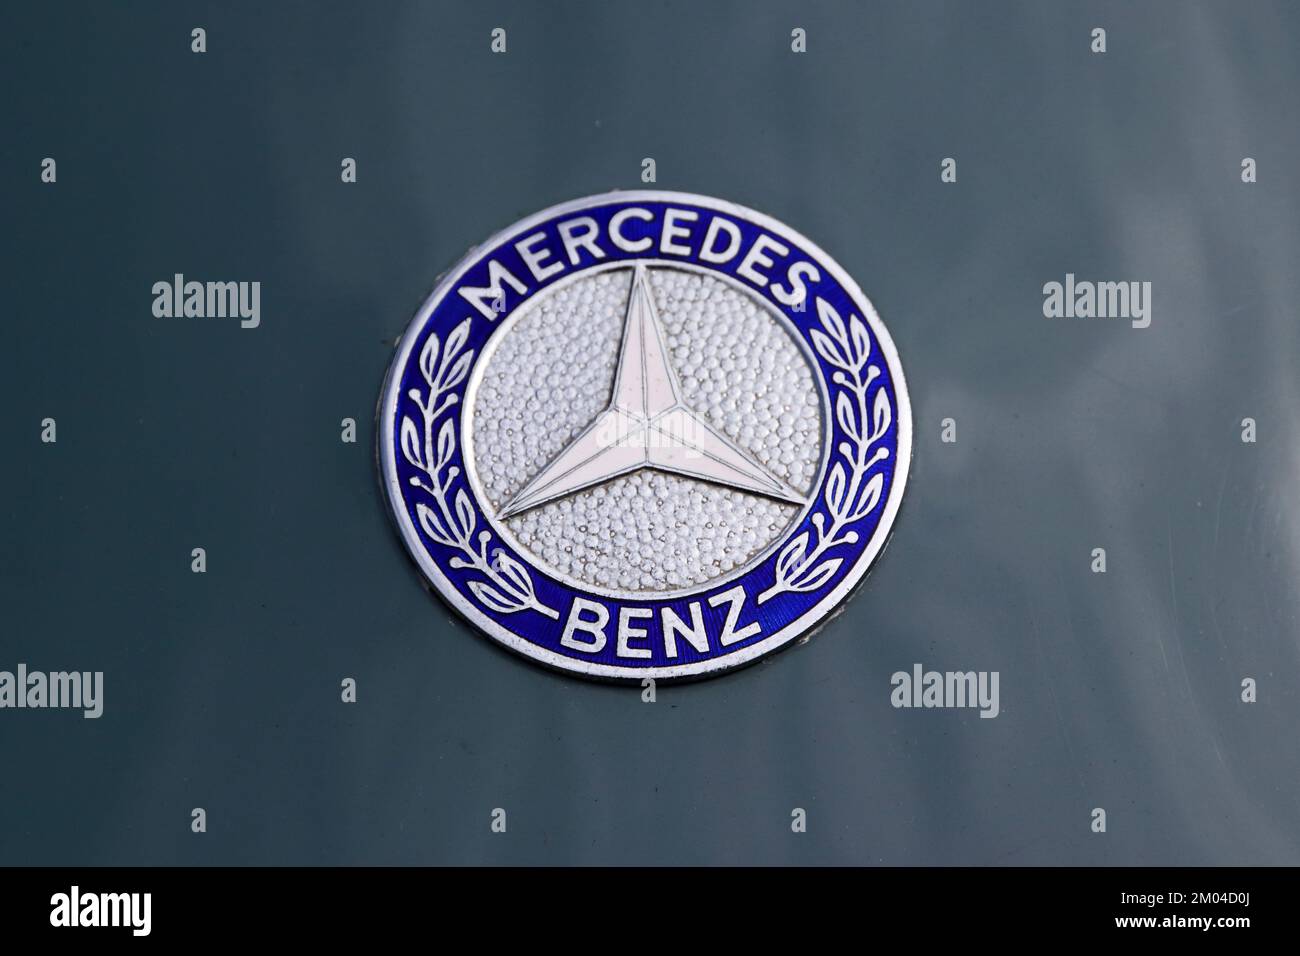 Mercedes Benz car badge Stock Photo